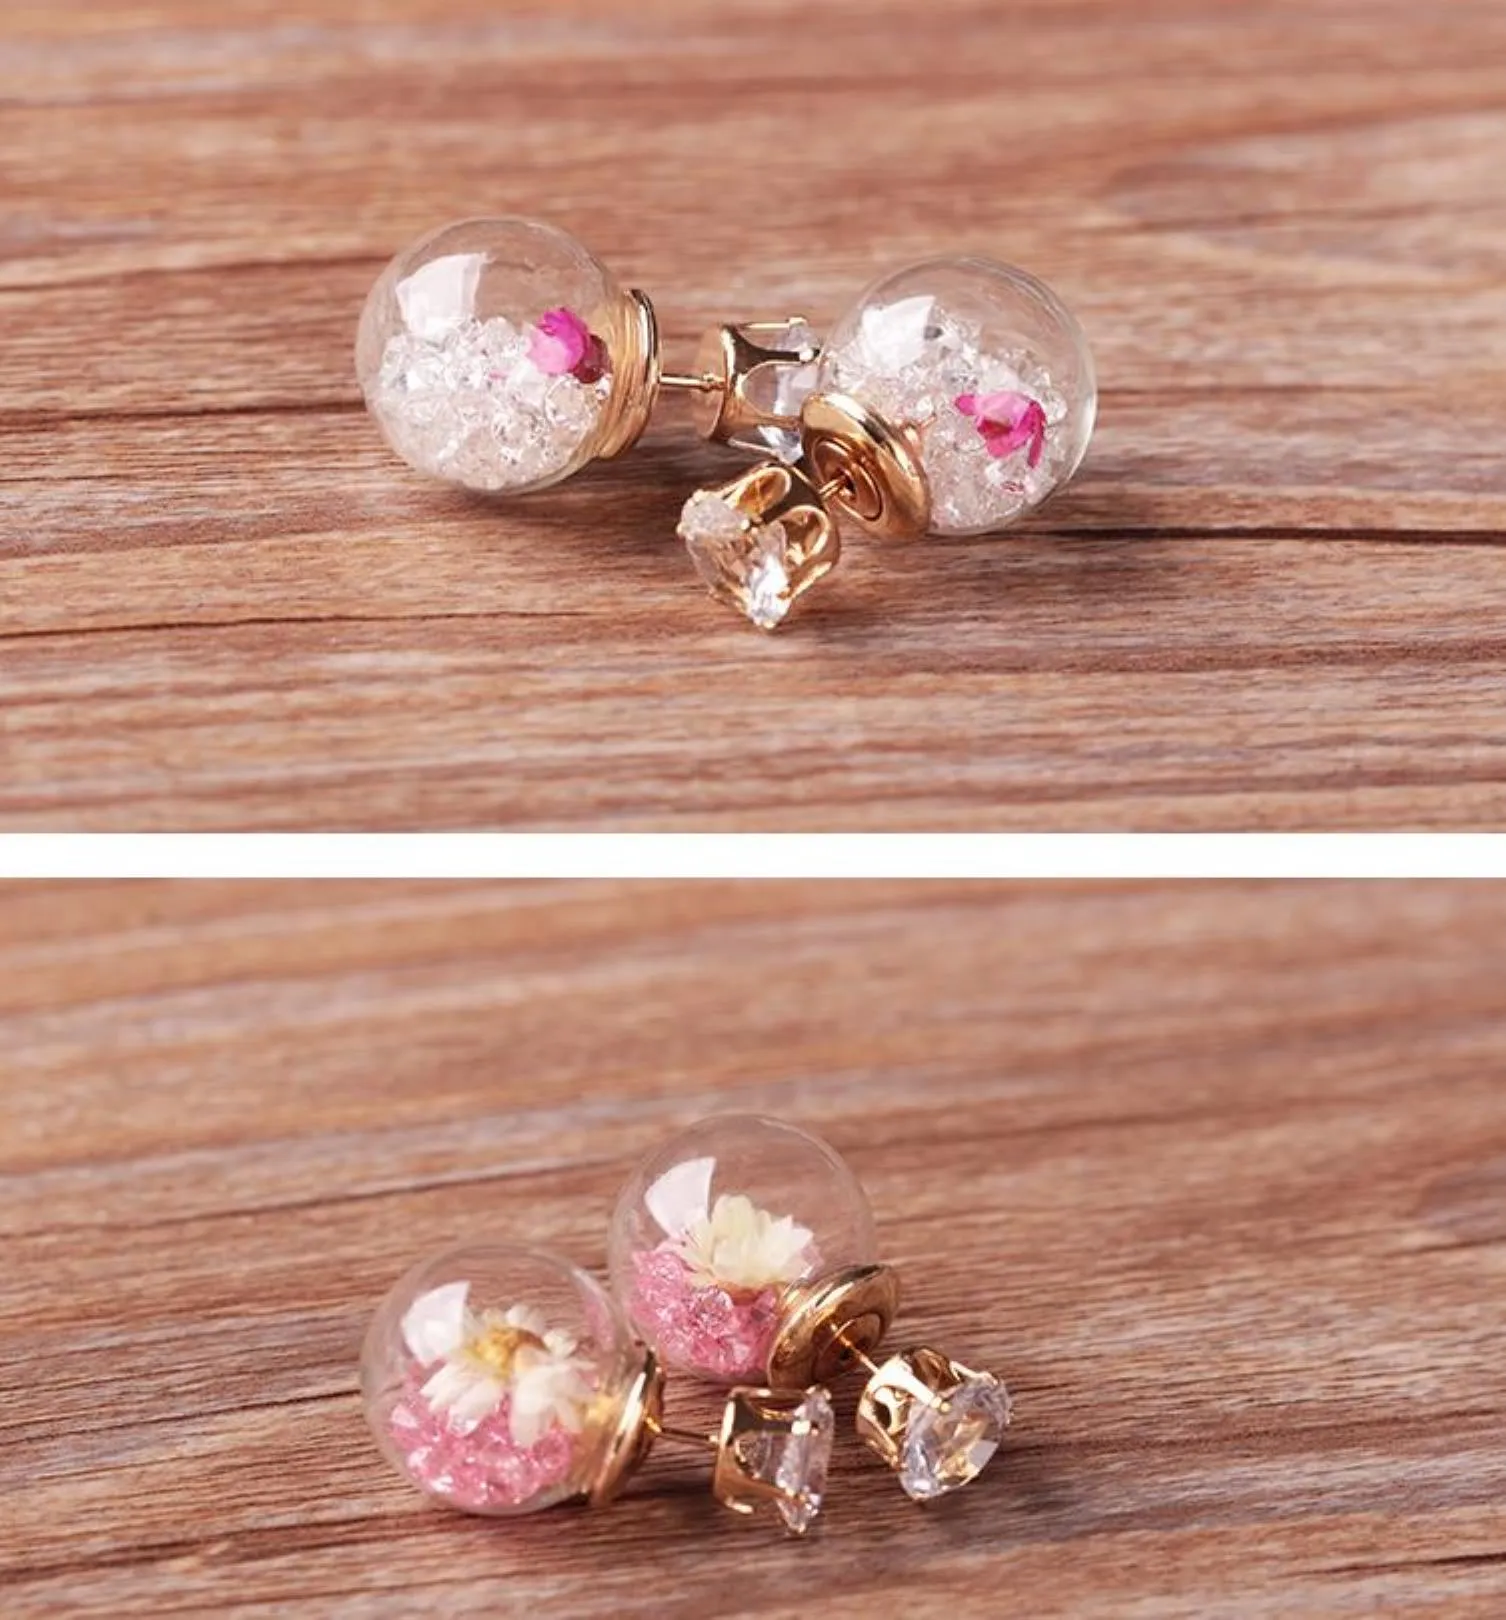 S35 Hot Europe Fashion Jewelry Cute Glass Ball Rhinestone Flower Stud Earrings Women